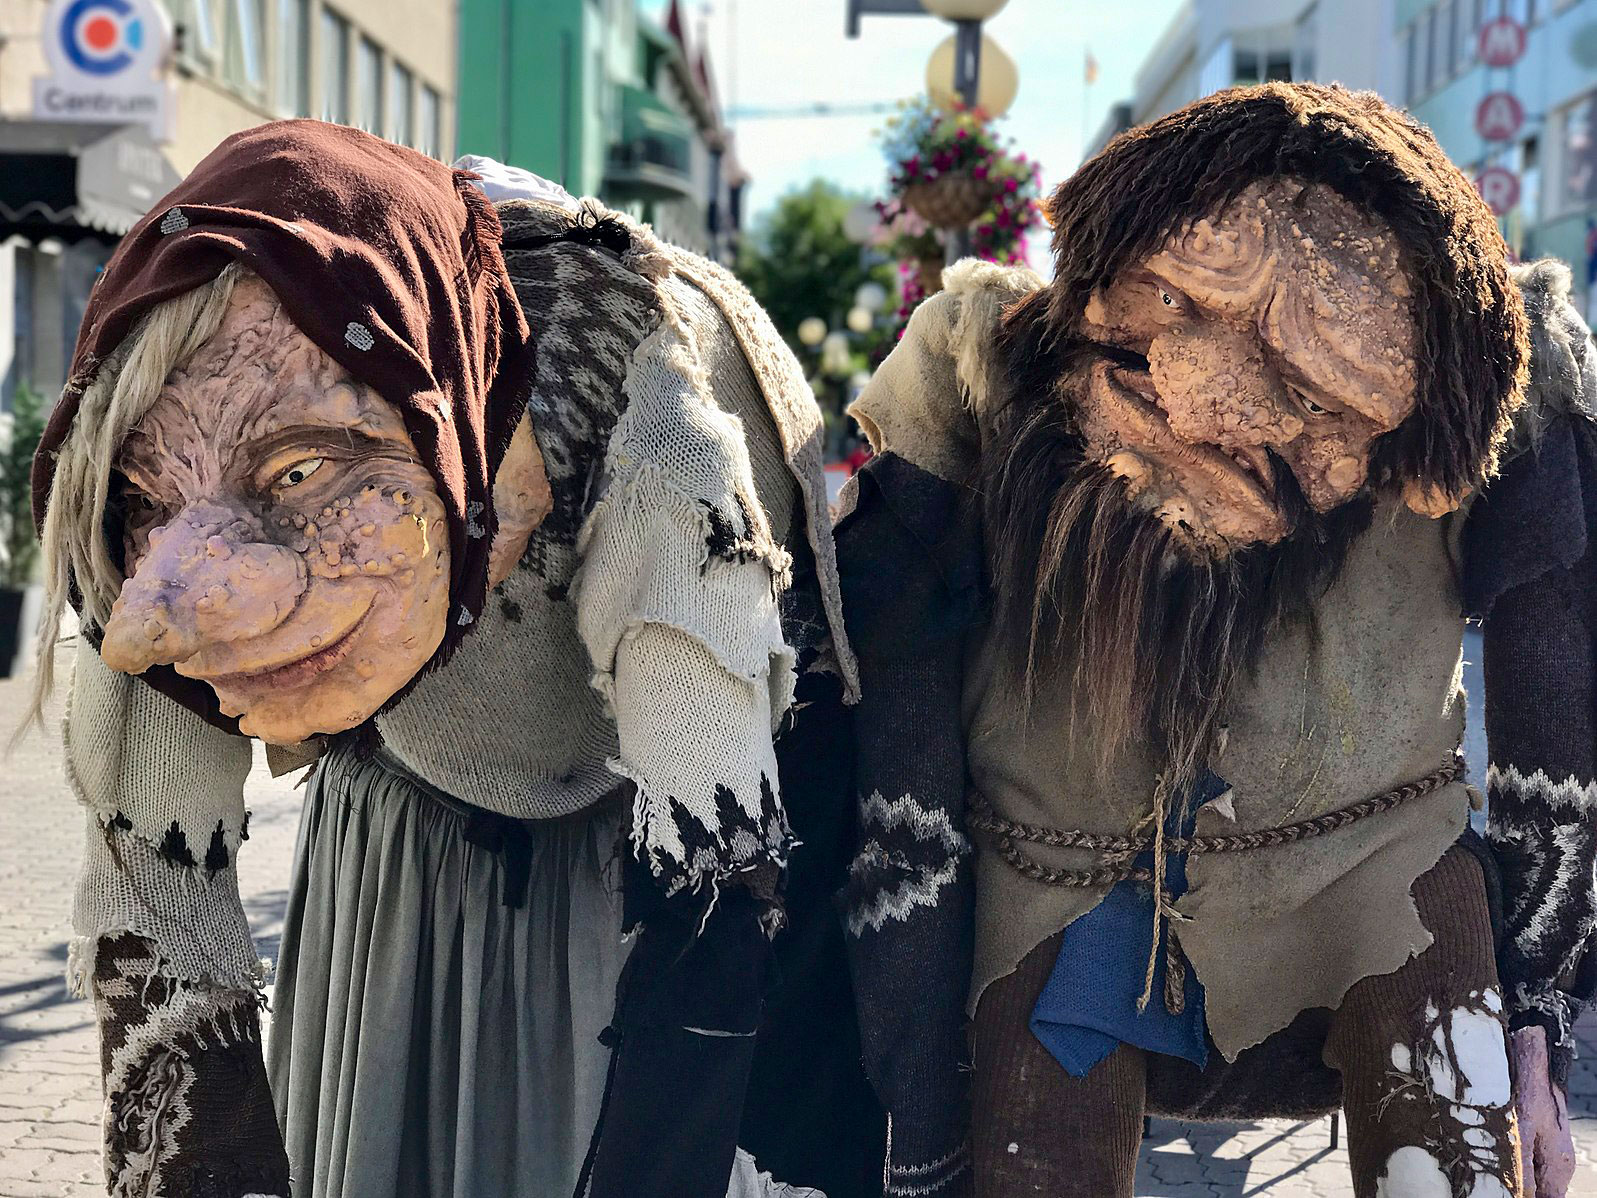 Grýla and Leppaluði - Icelandic folklore trolls